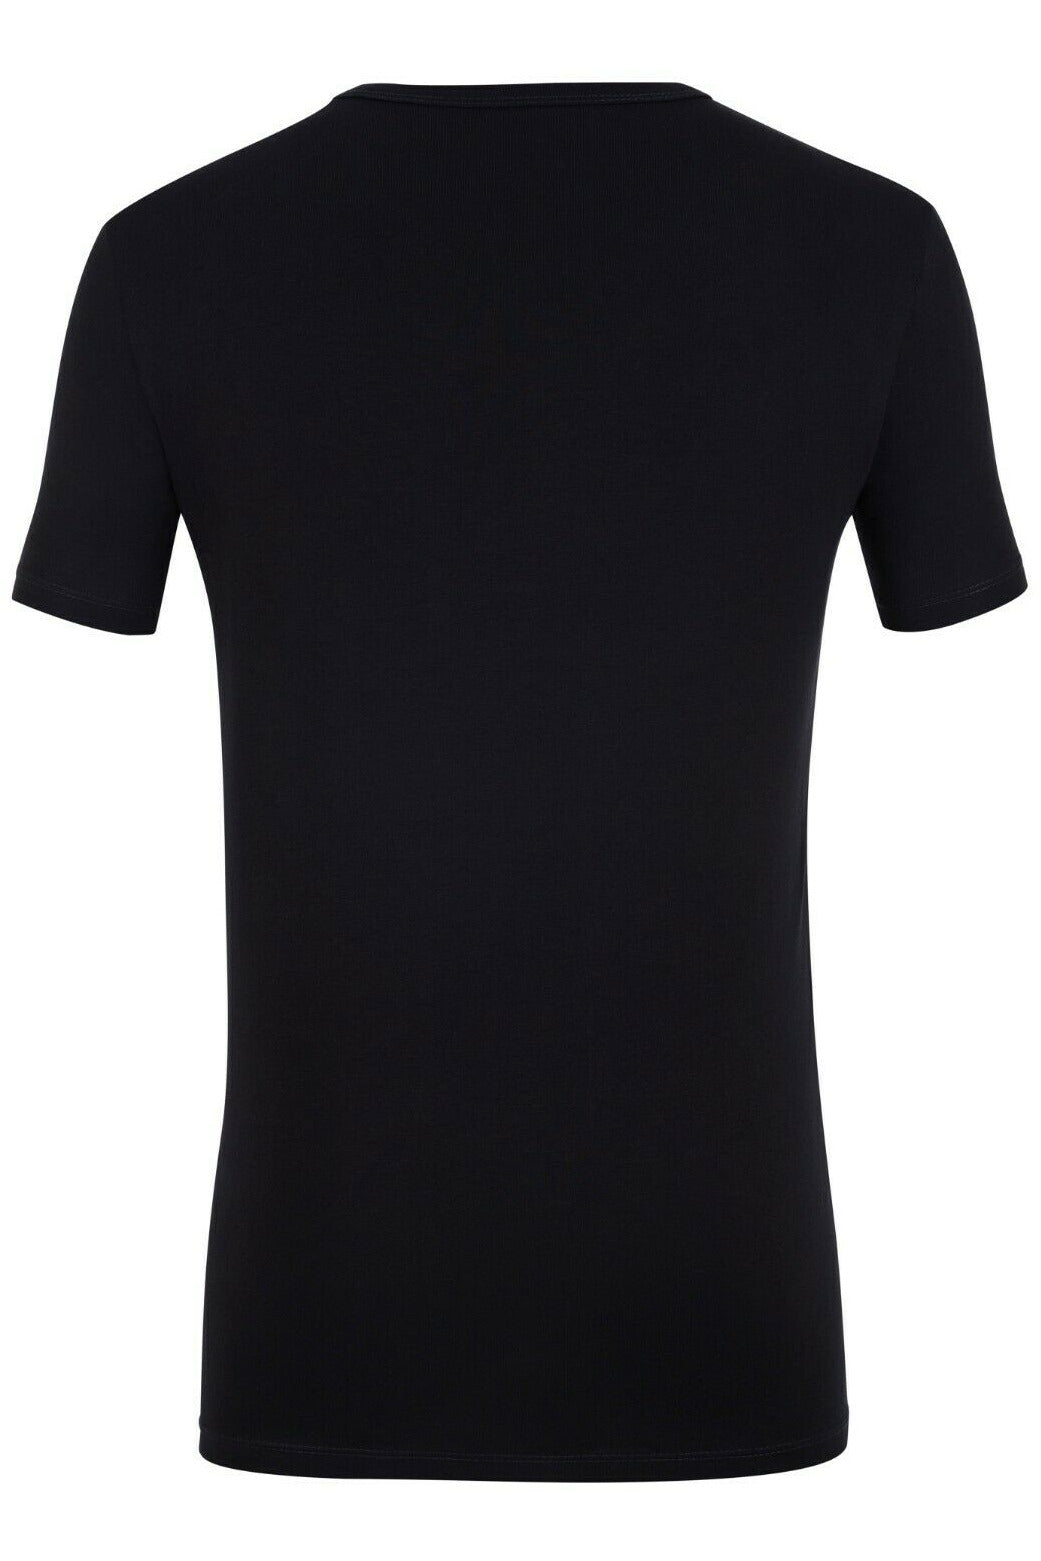 Emporio Armani EA7 Men T-Shirt Color Black Material Cotton